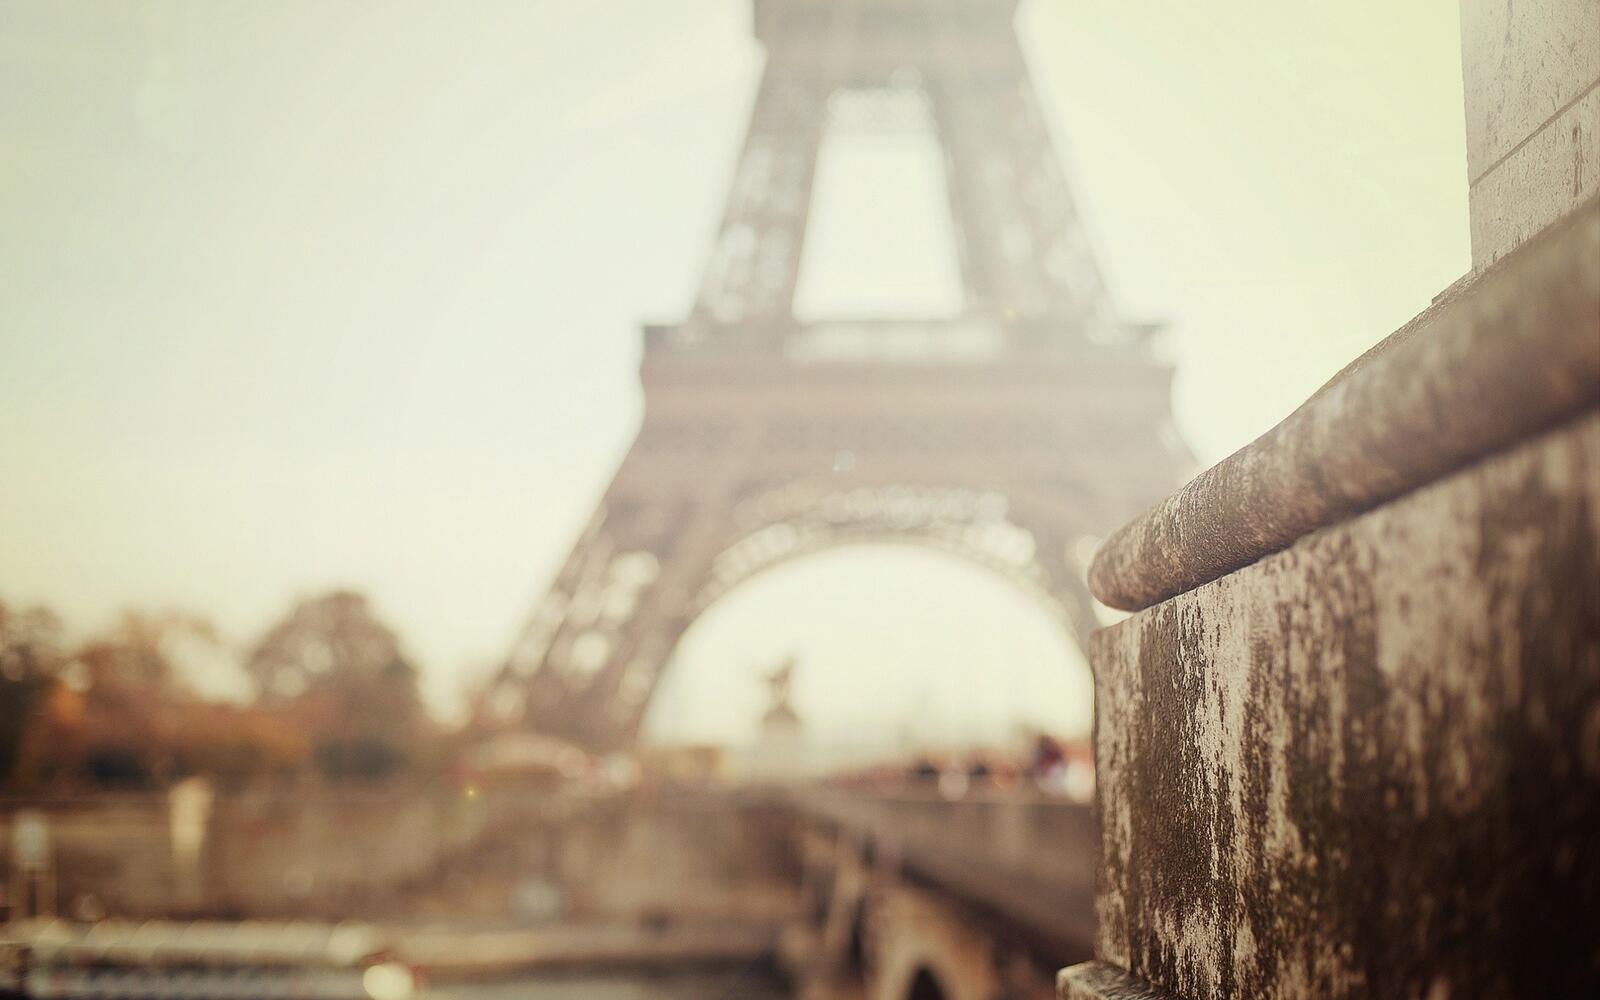 Wallpapers Paris Eiffel Tower blurred on the desktop